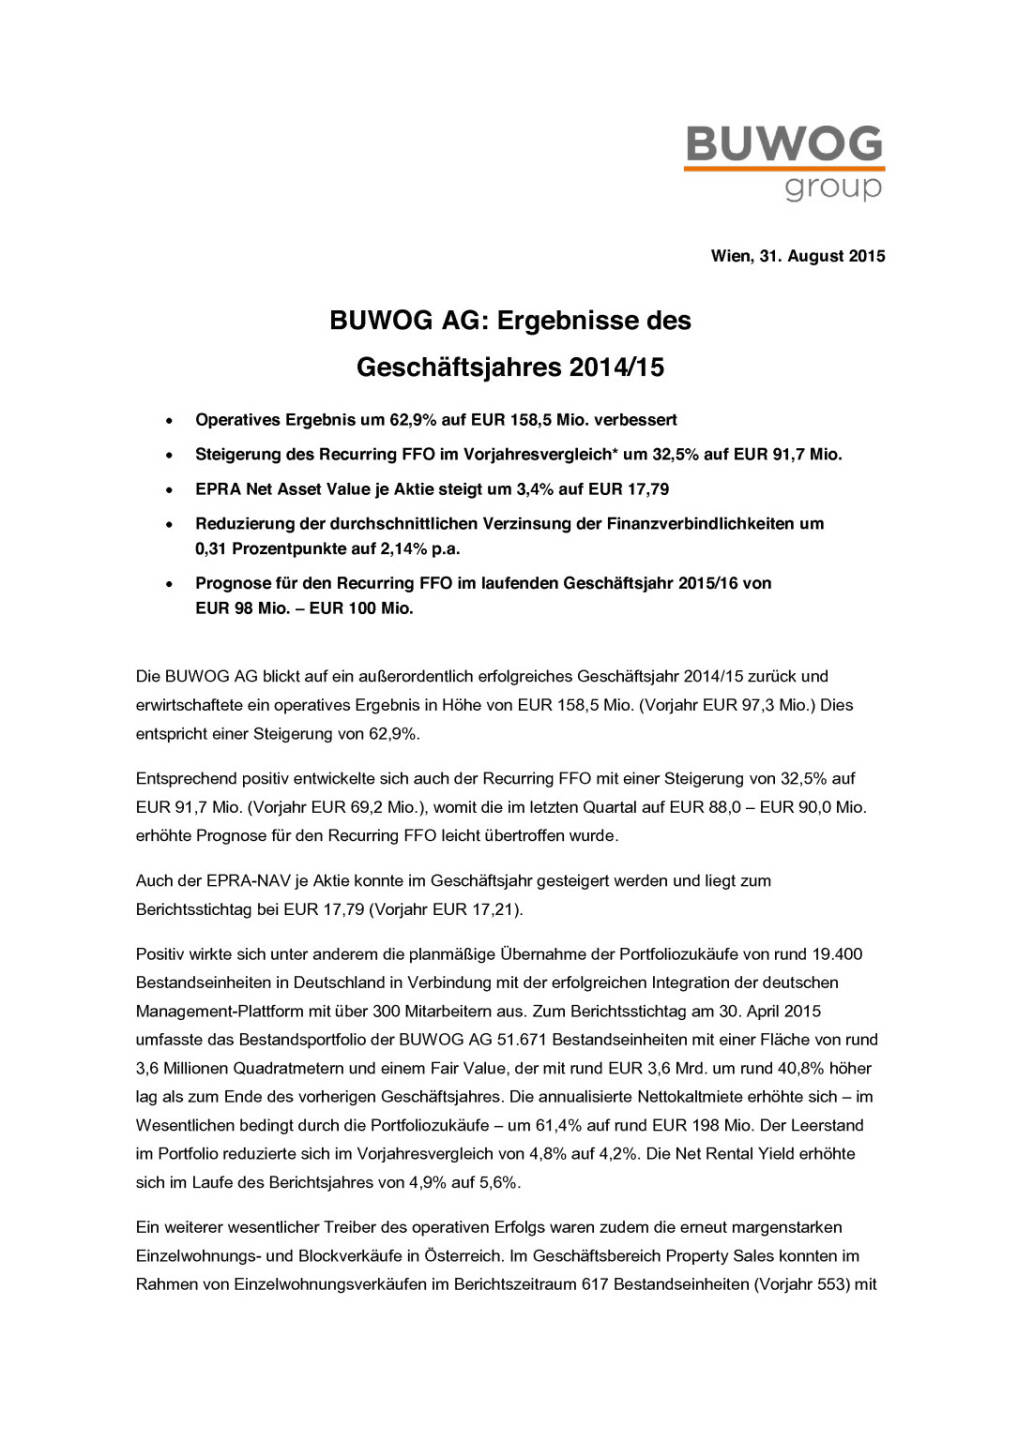 Buwog AG: Ergebnisse Geschäftsjahr 2014/15, Seite 1/4, komplettes Dokument unter http://boerse-social.com/static/uploads/file_334_buwog_ag_ergebnisse_geschäftsjahr_201415.pdf